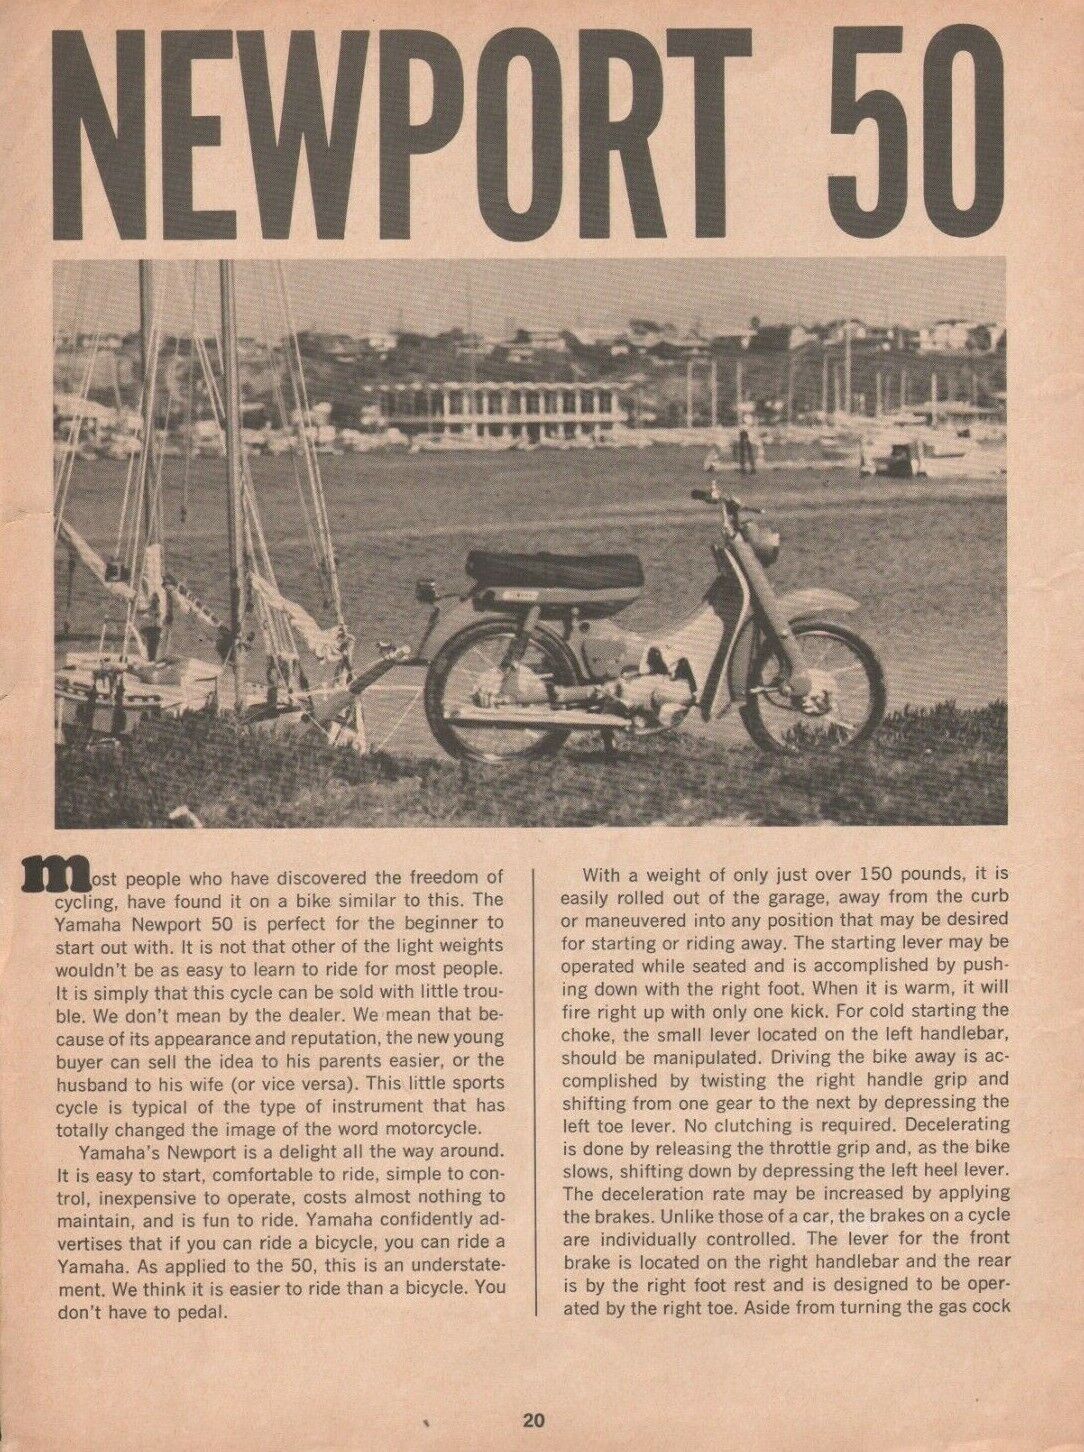 1966 Yamaha Newport 50 - 4-Page Vintage Motorcycle Article